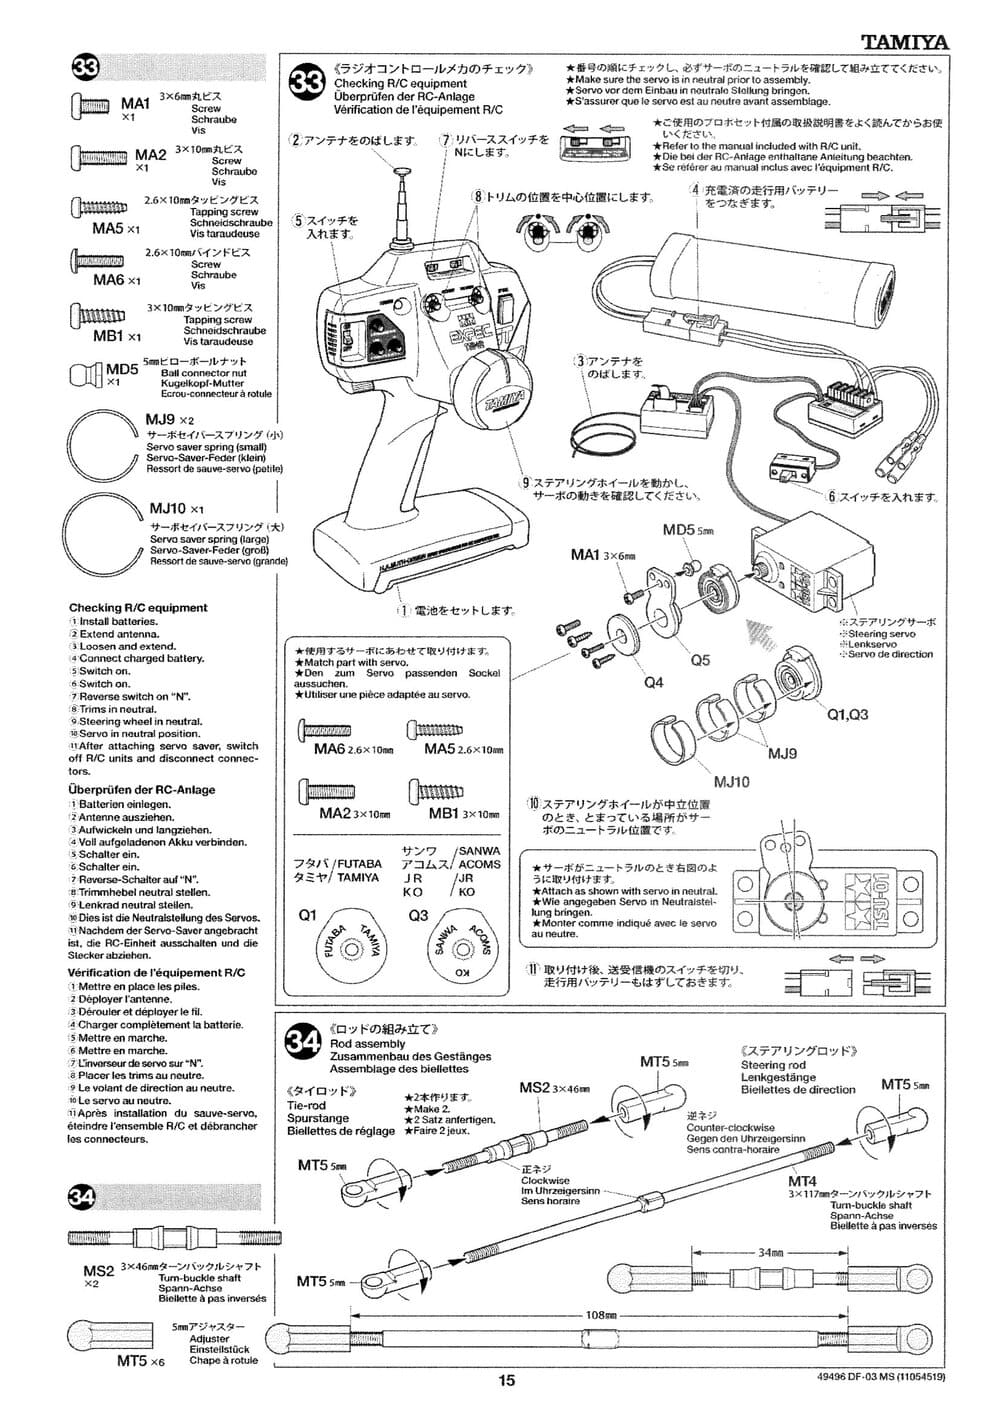 Tamiya - DF-03 MS Chassis Chassis - Manual - Page 15